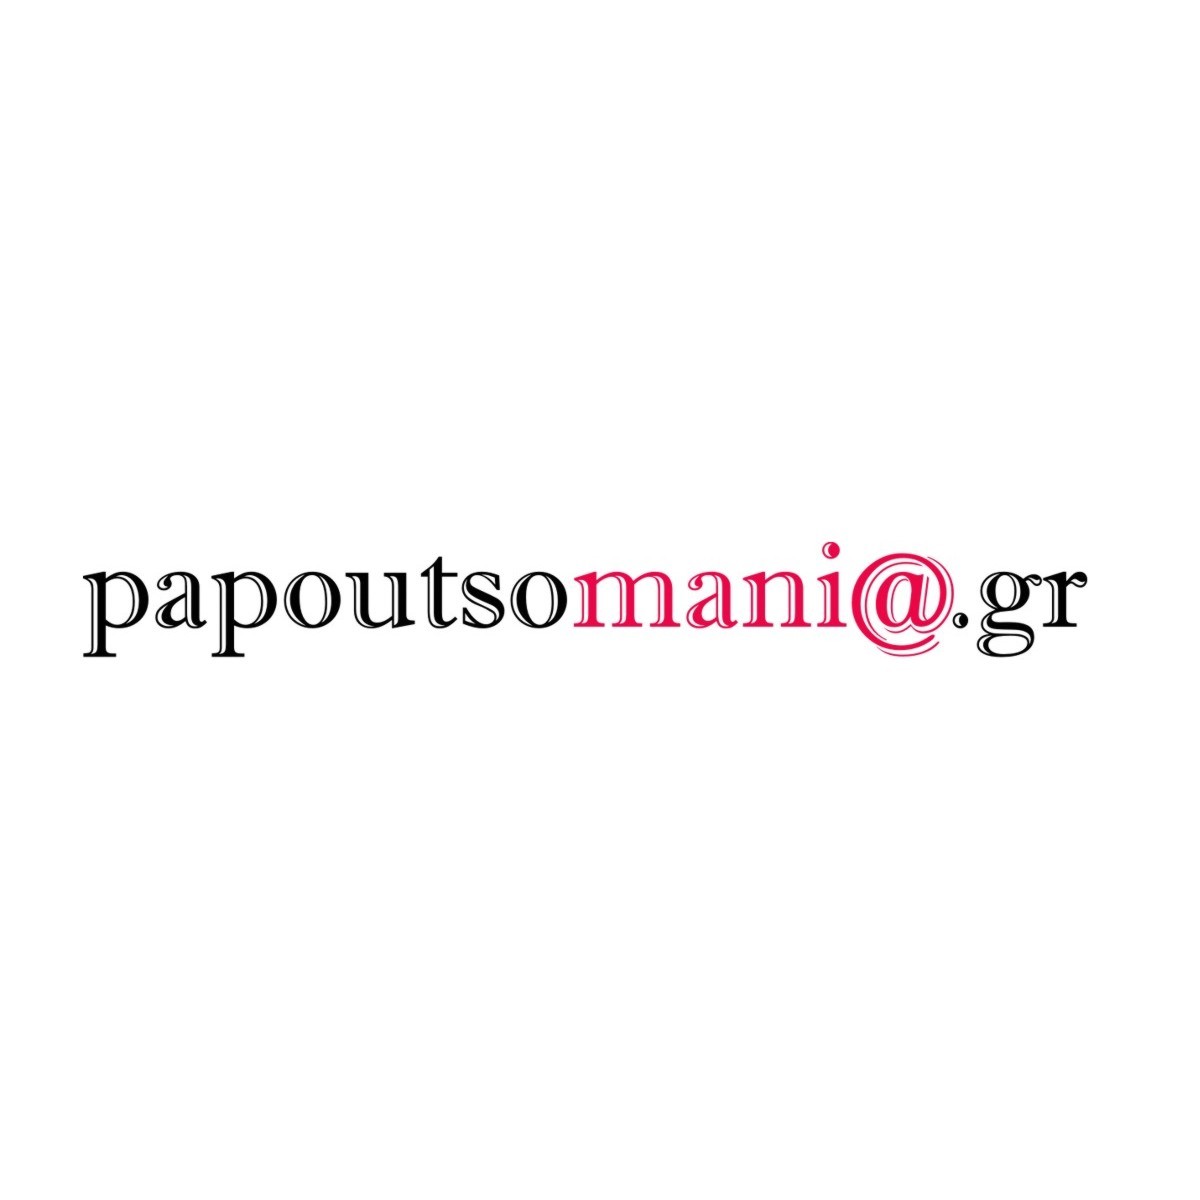 !papoutsomania-logo.JPG